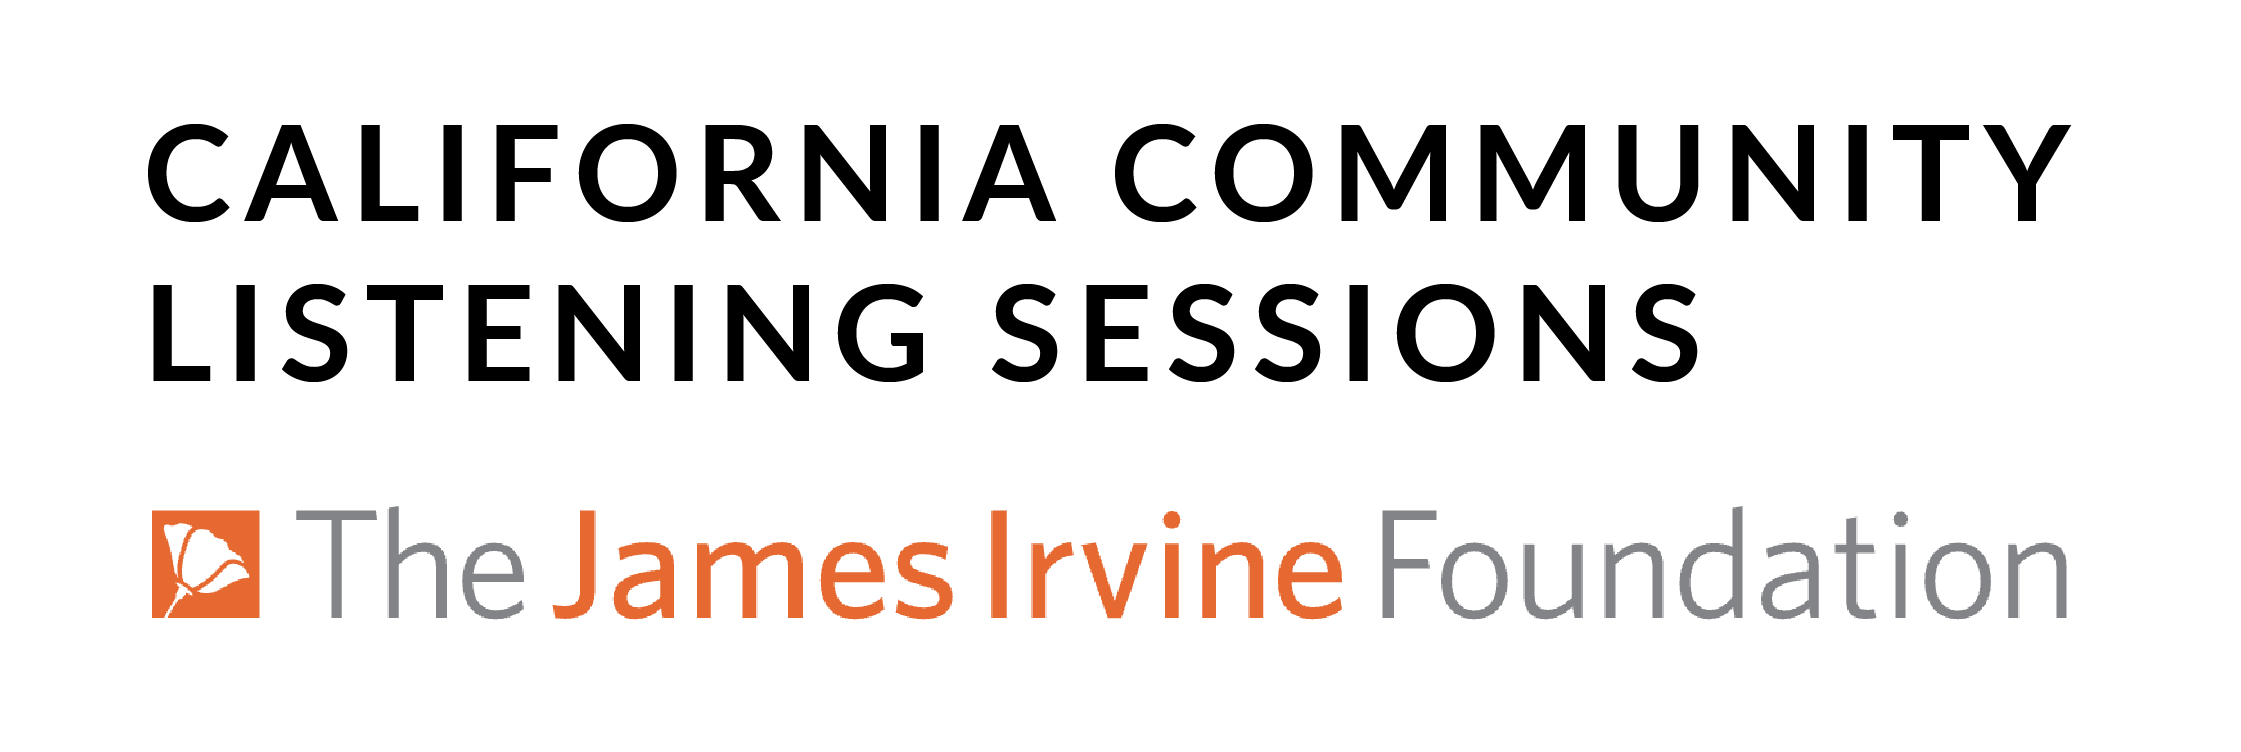 California Community Listening Sessions